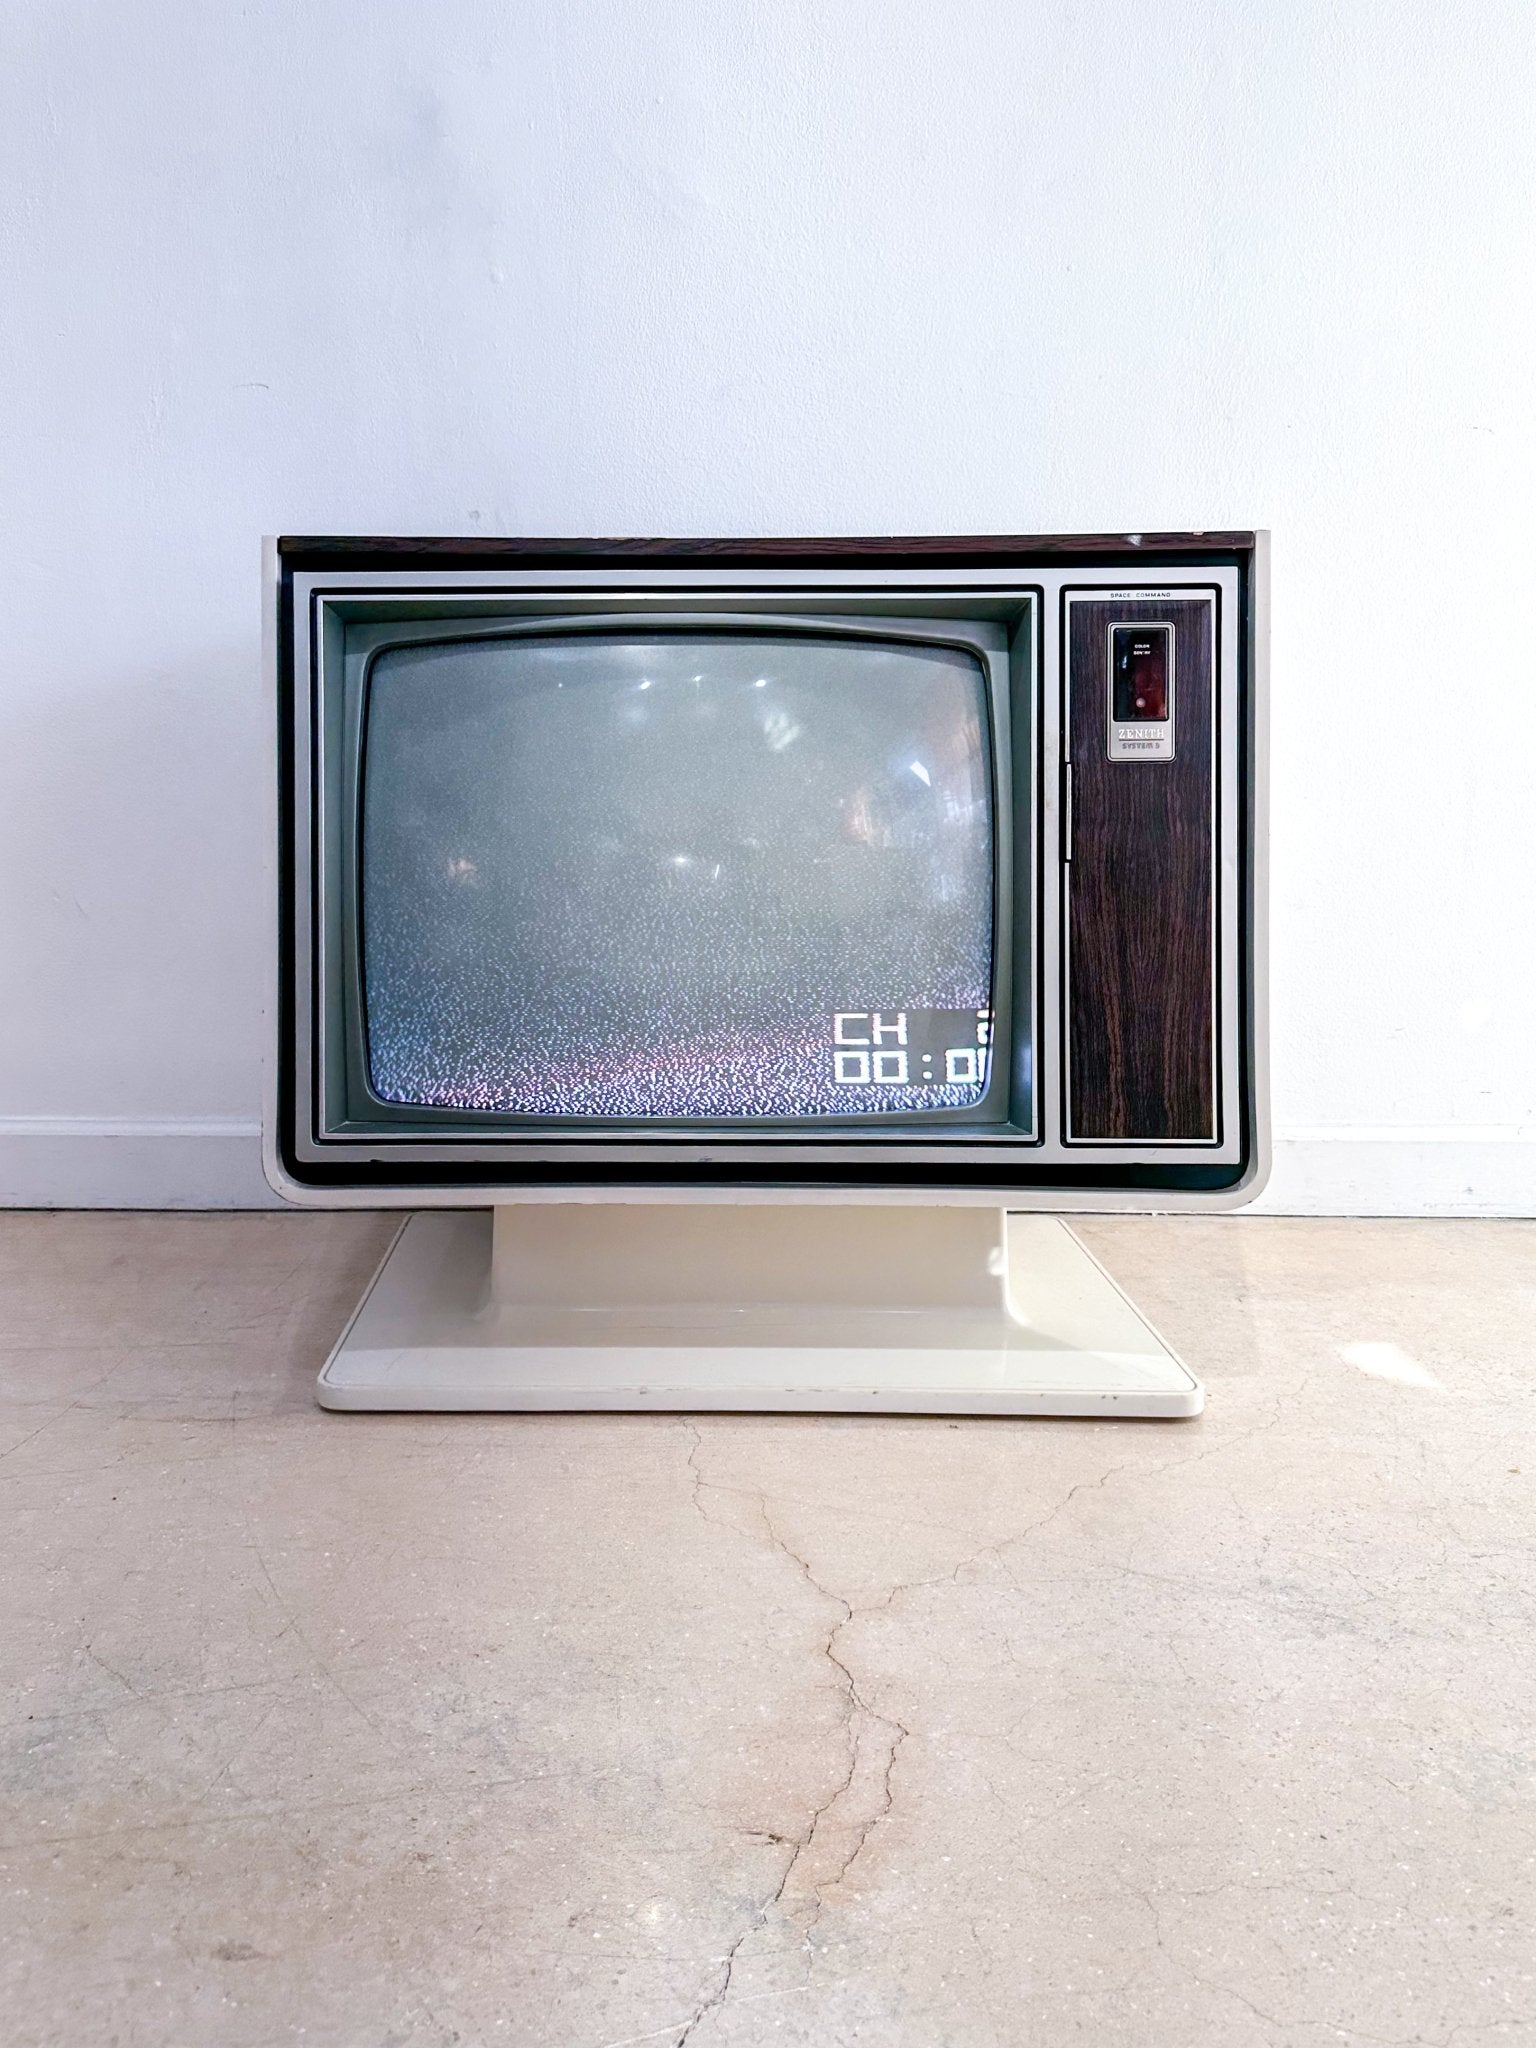 Vintage Zenith Space Age TV - Rehaus